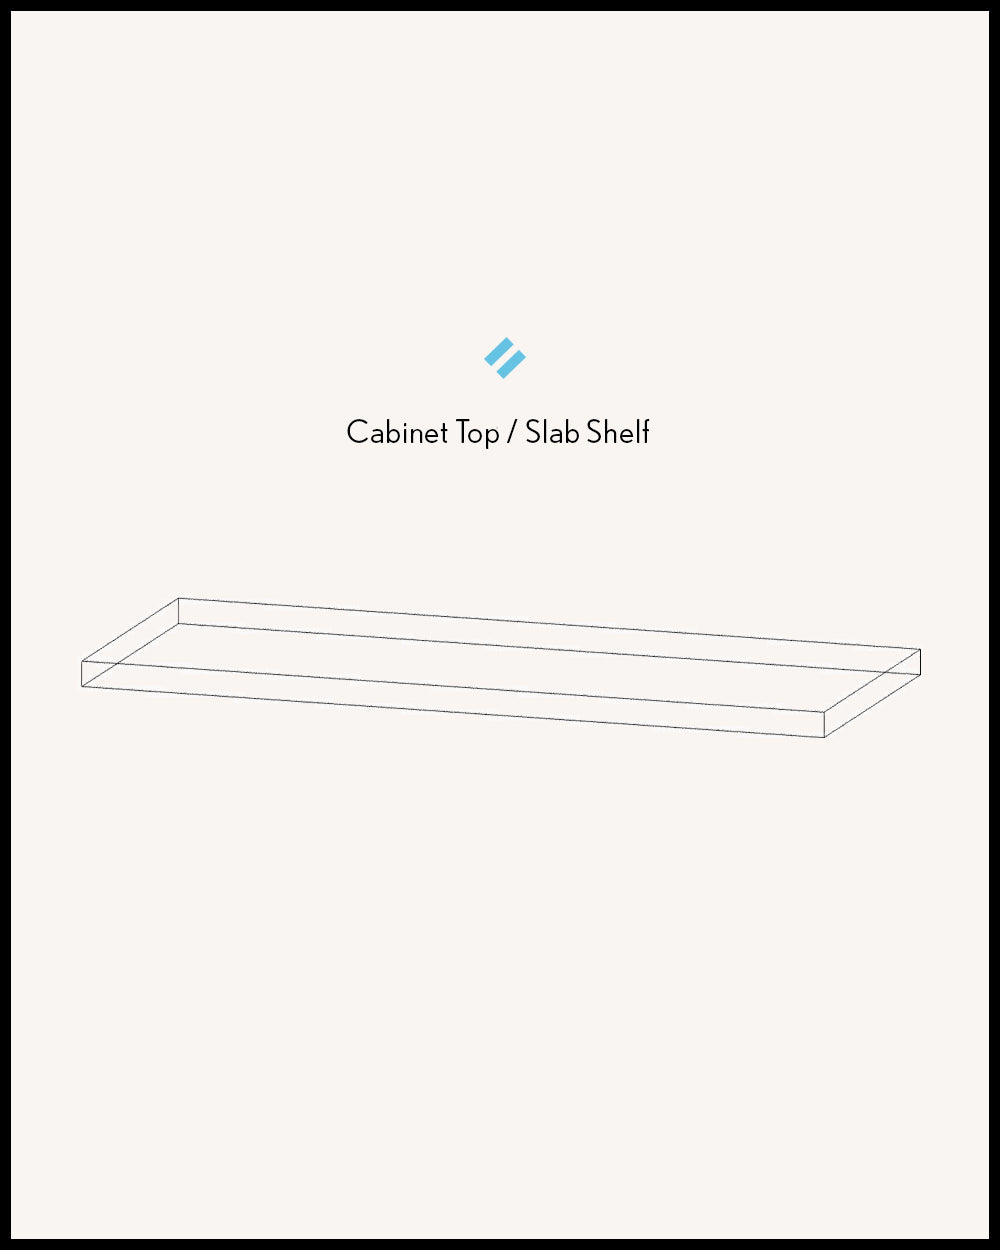 White 1.75" thick Cabinet Top / Slab Shelf